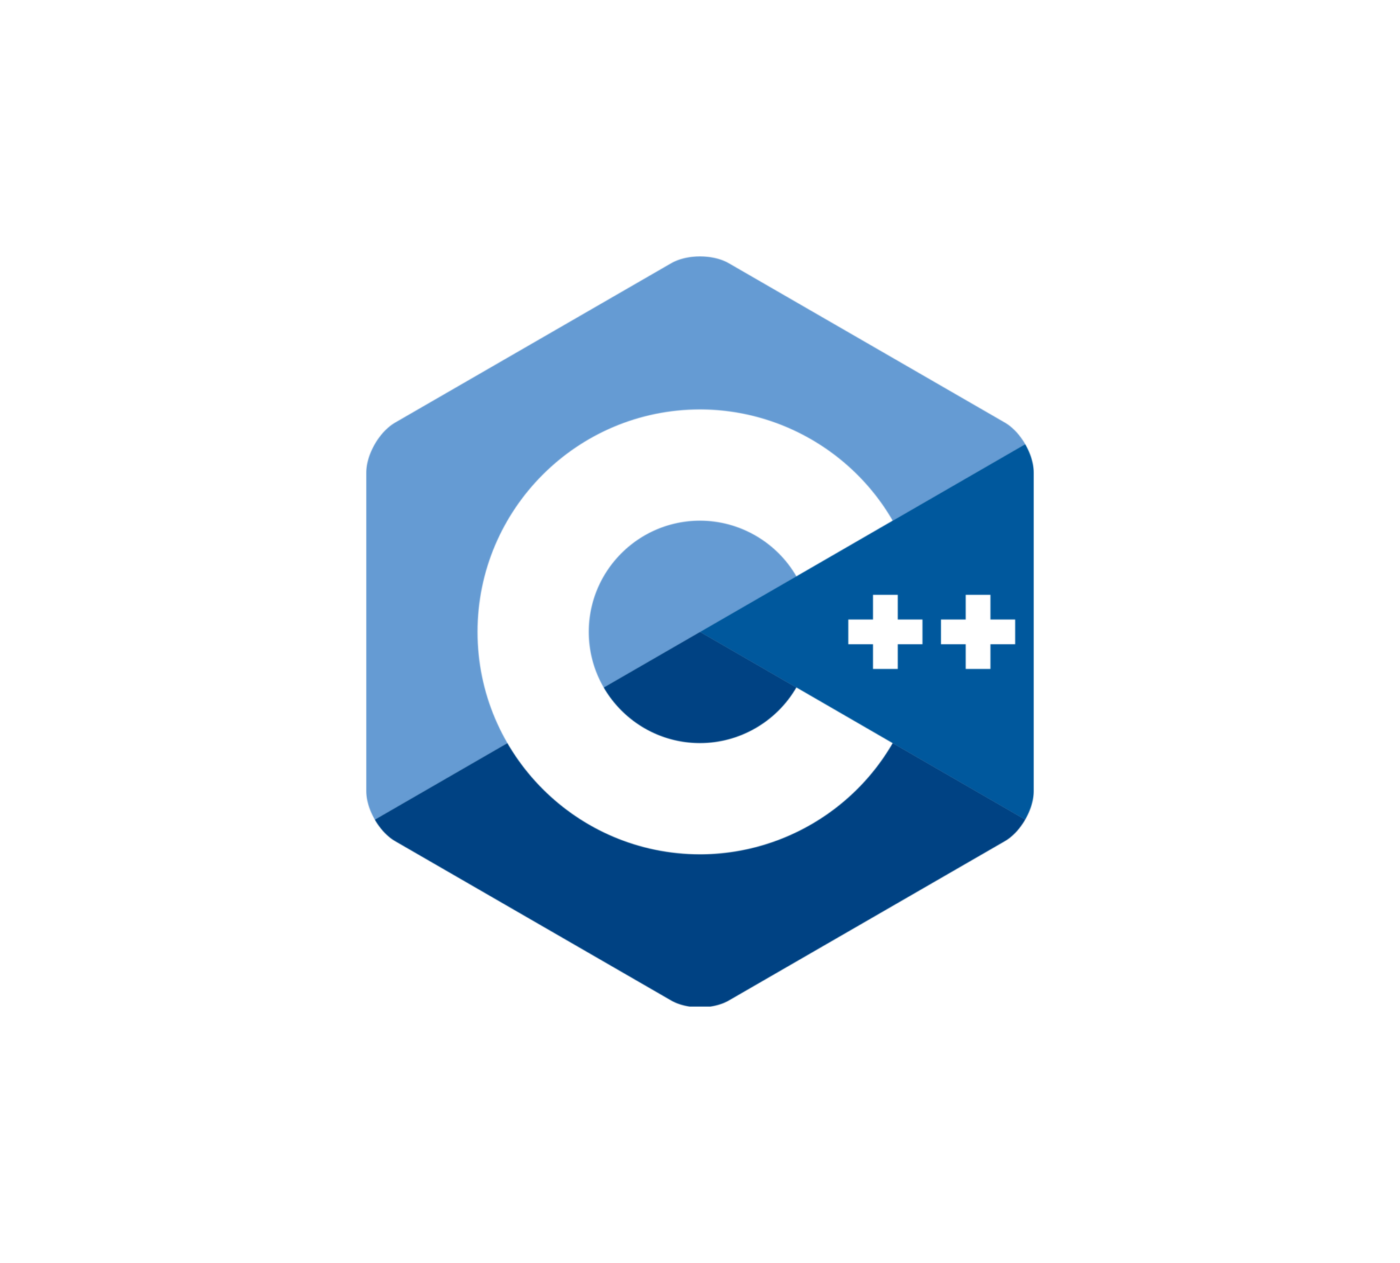 C++開発のためのVisual Studioとvcpkgを統合したパッケージ管理